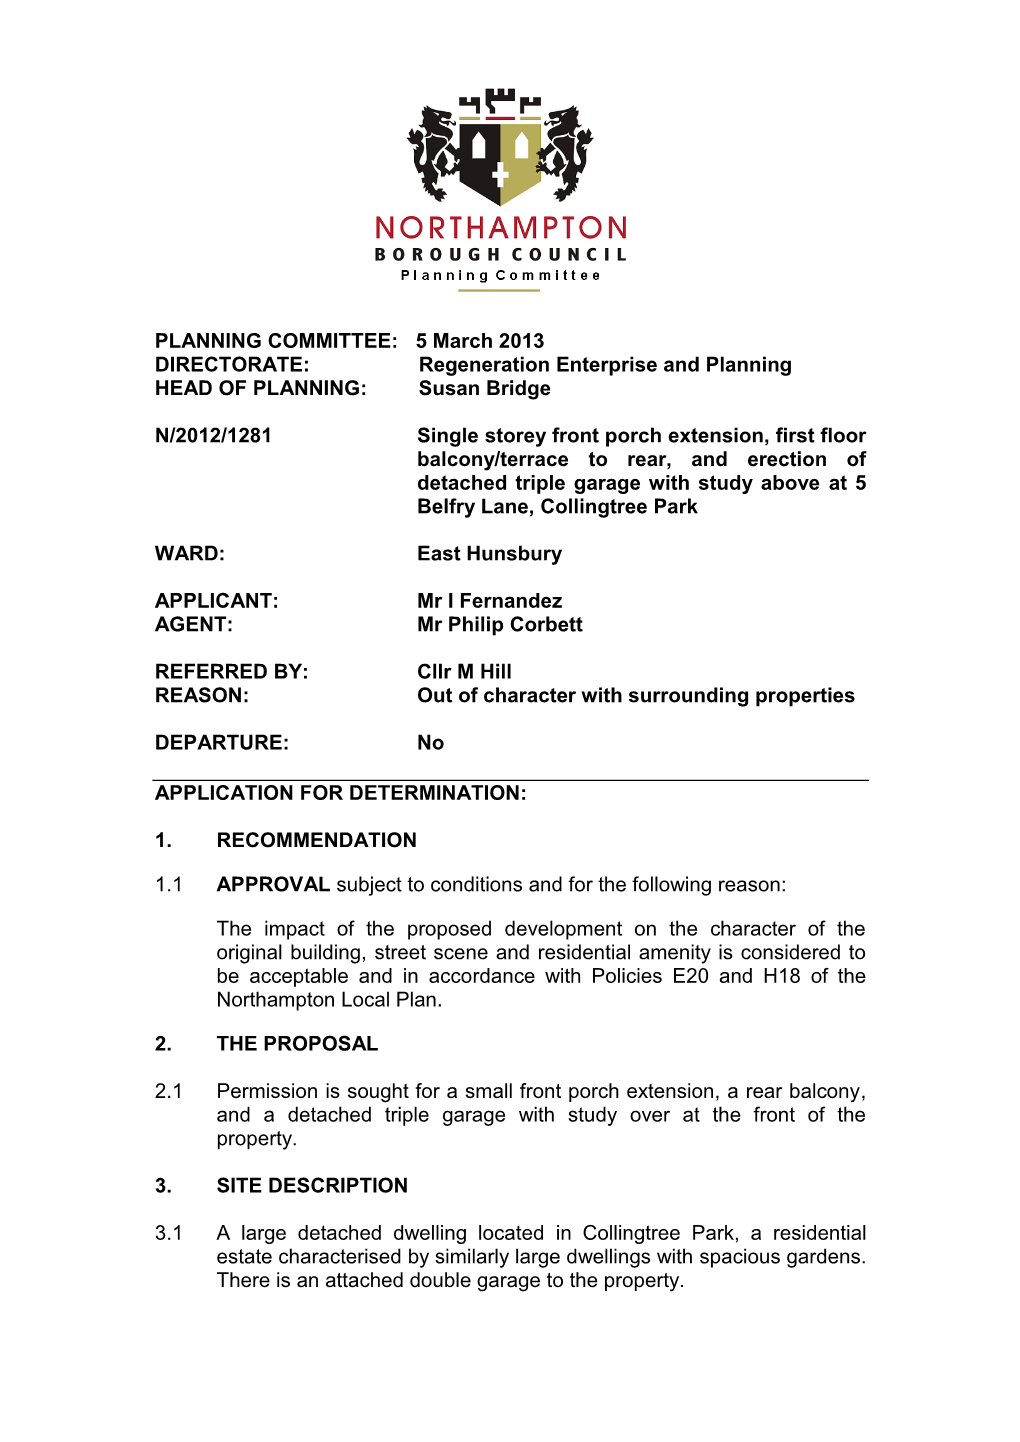 PLANNING COMMITTEE: 5 March 2013 DIRECTORATE: Regeneration Enterprise and Planning HEAD of PLANNING: Susan Bridge